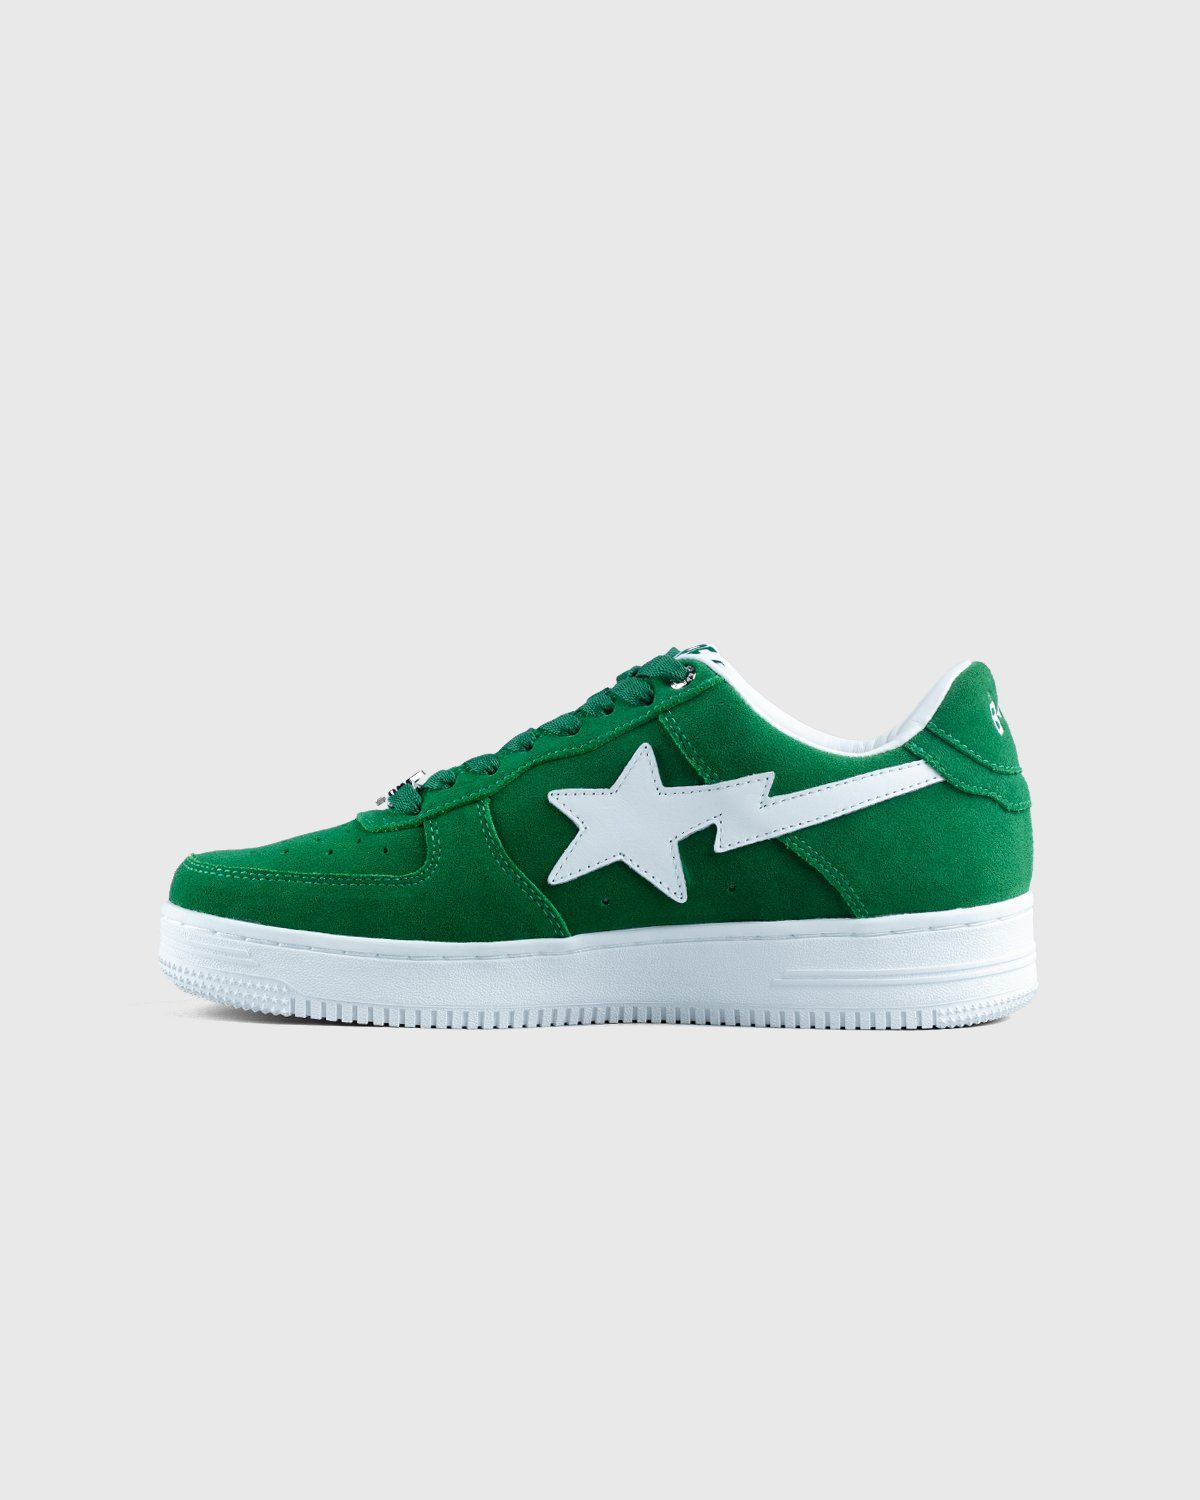 BAPE x Highsnobiety – BAPE STA Green - Sneakers - Green - Image 4